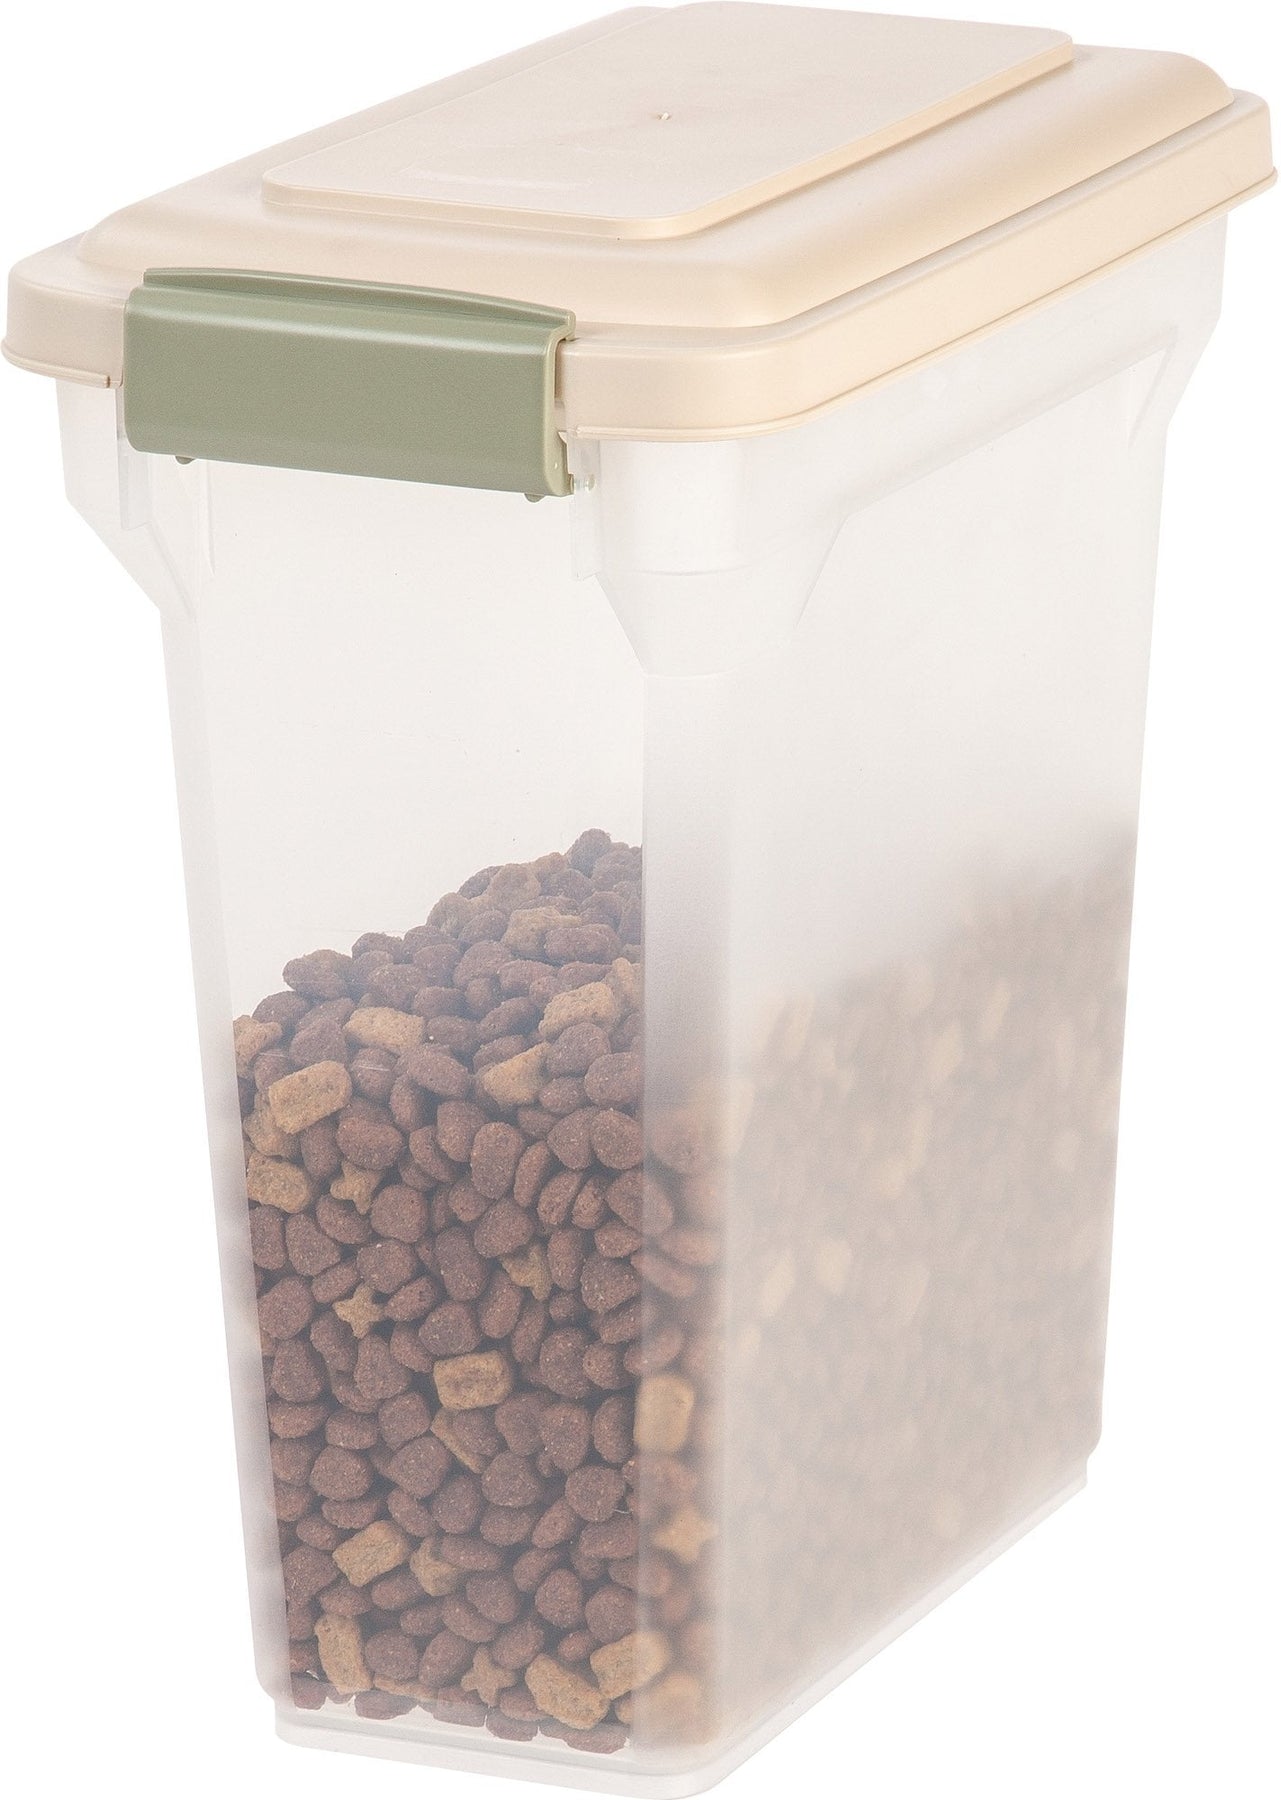 Iris 55 Quart Airtight Pet Food Container, Almond